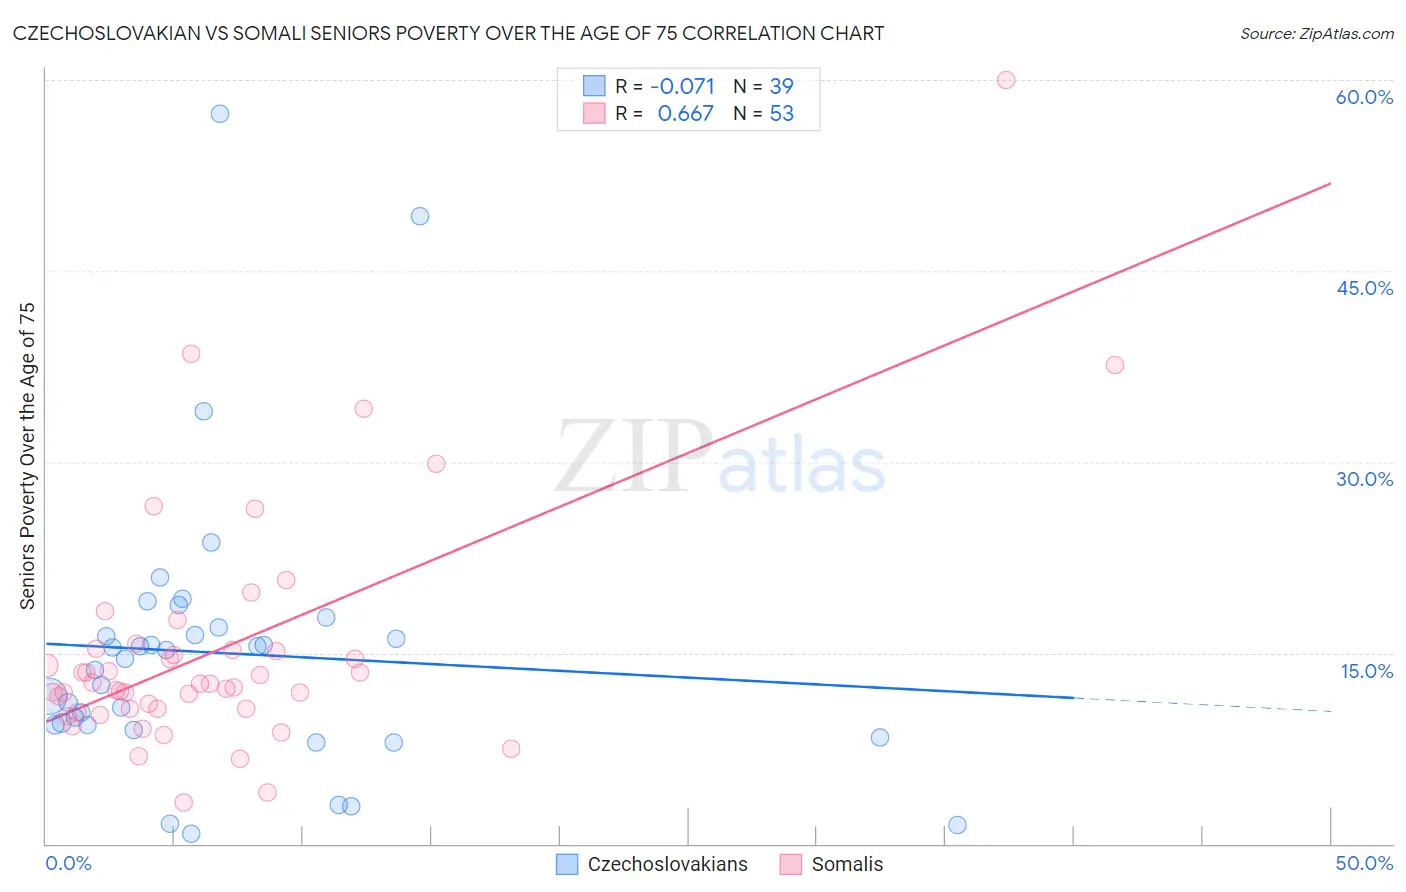 Czechoslovakian vs Somali Seniors Poverty Over the Age of 75